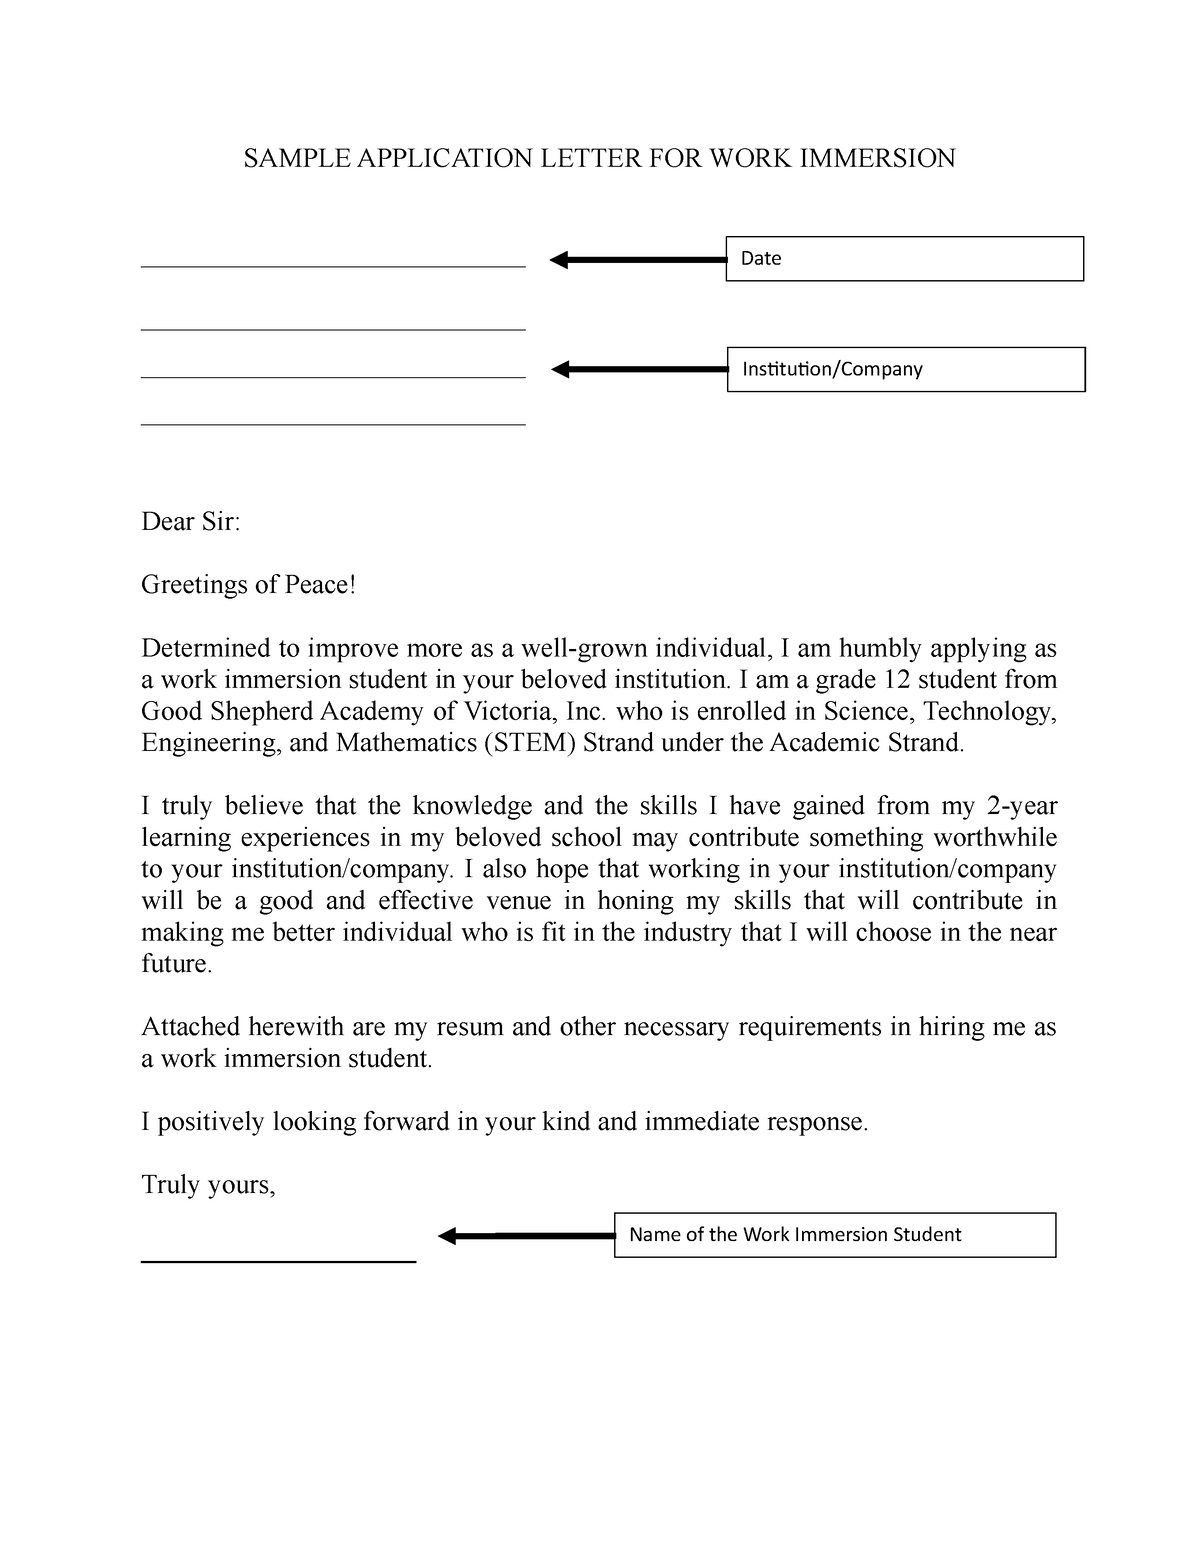 application letter for work immersion computer system servicing